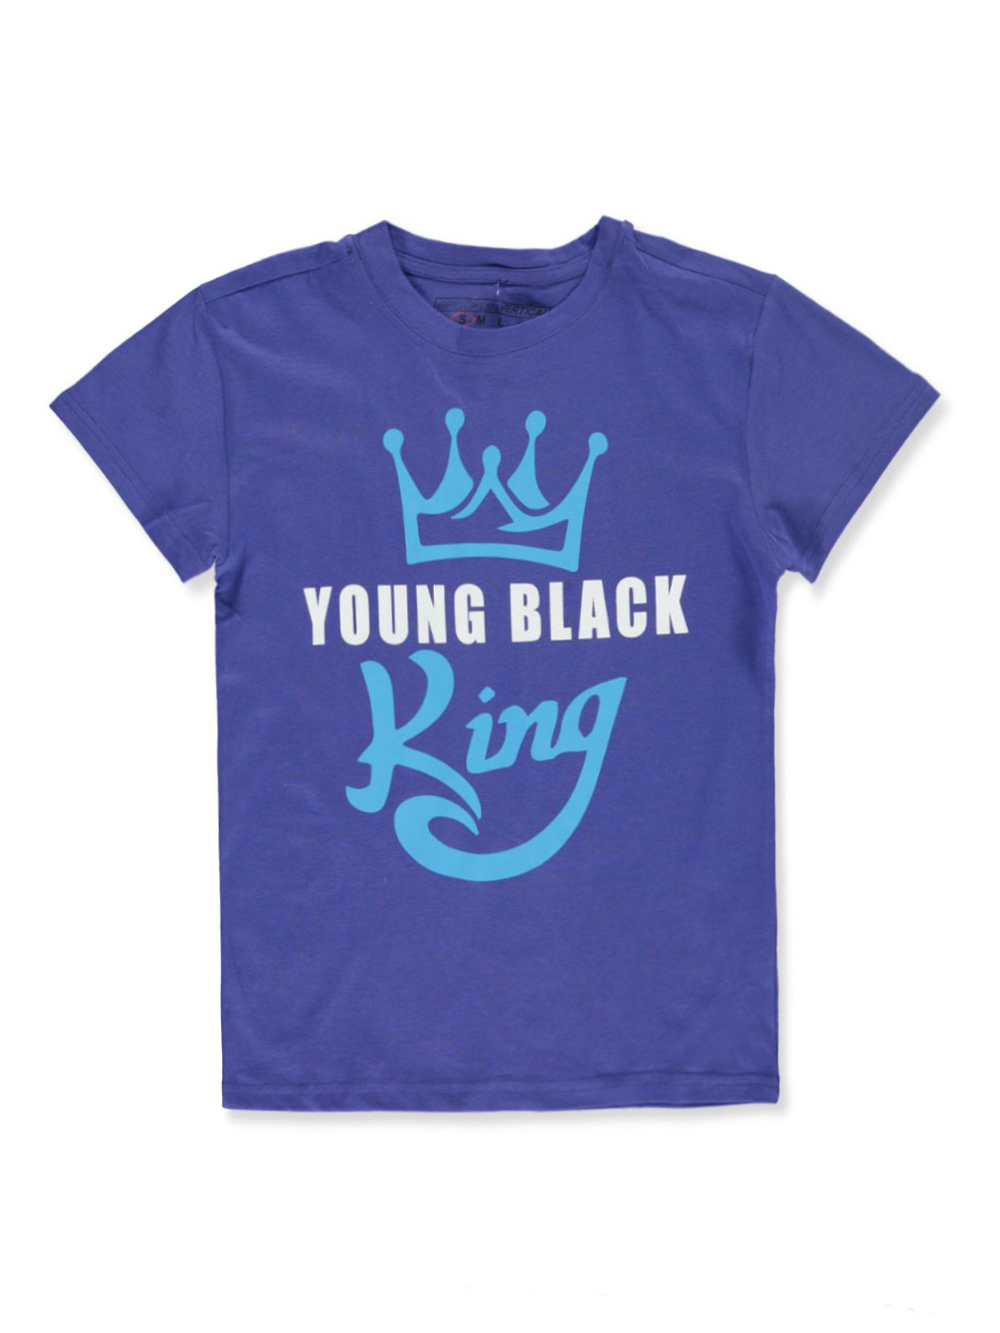 Boys Royal Blue and Black T-Shirts